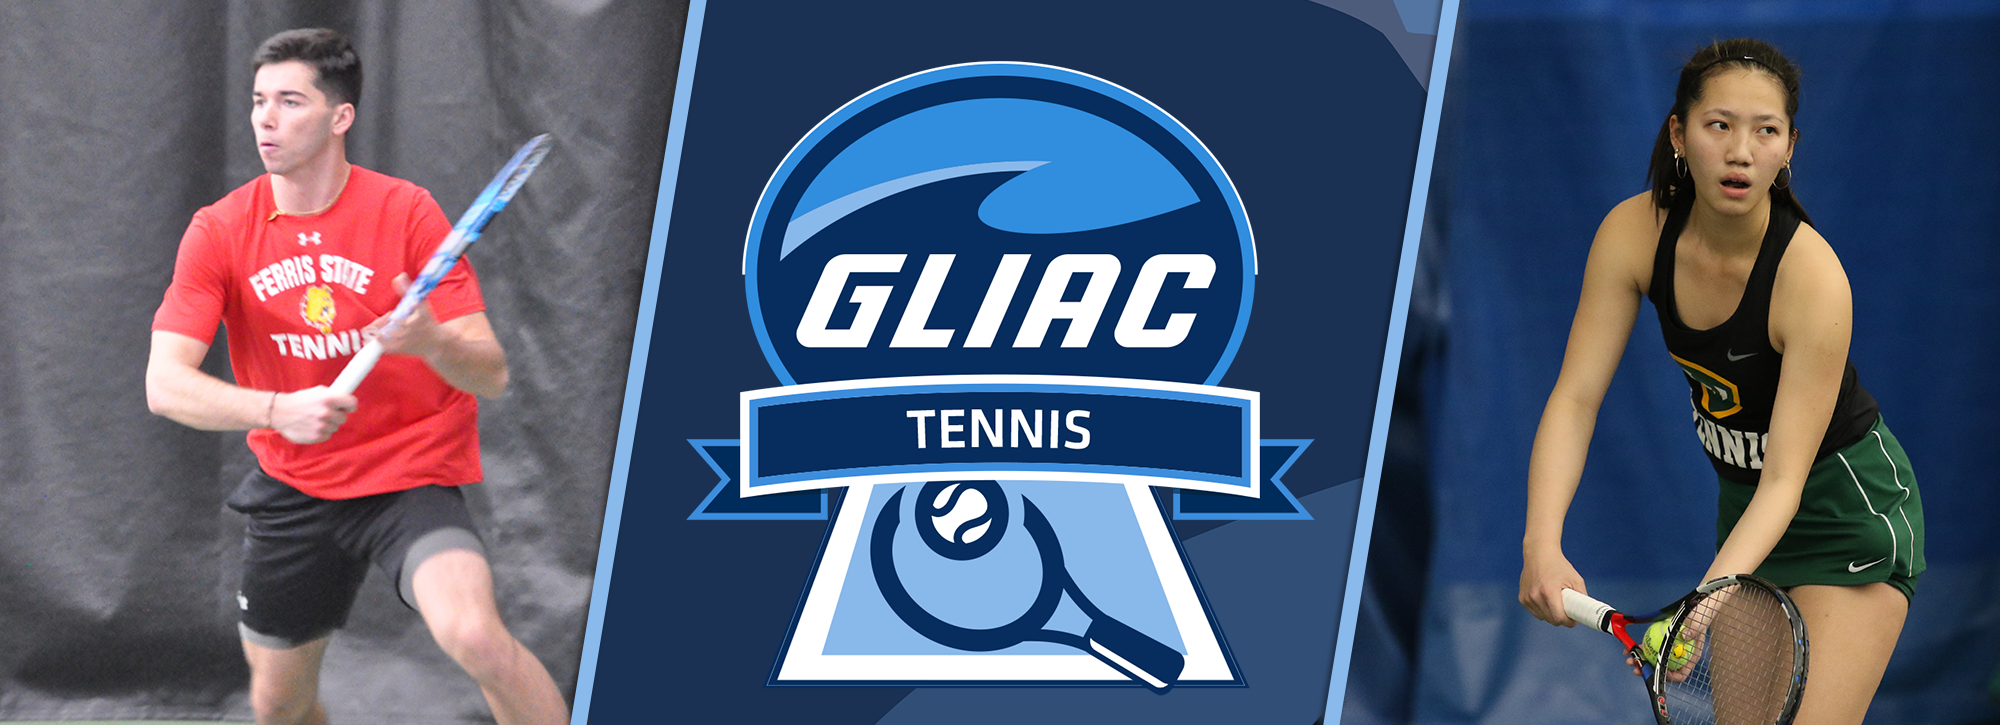 FSU's Guerre, WSU's Liong  Claim GLIAC Tennis Weekly Honors